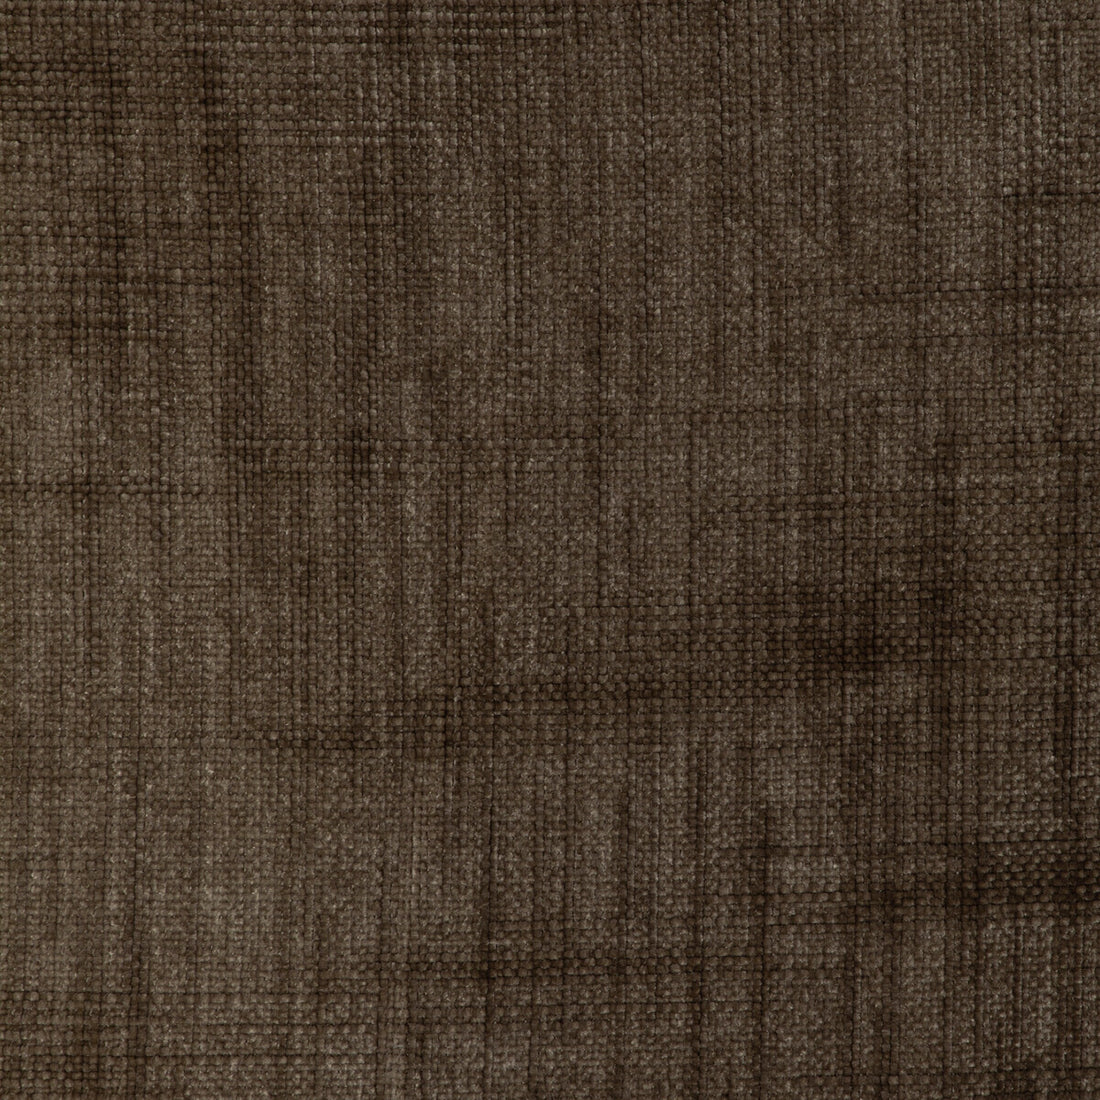 Kravet Smart fabric in 36991-6 color - pattern 36991.6.0 - by Kravet Smart in the Performance Kravetarmor collection